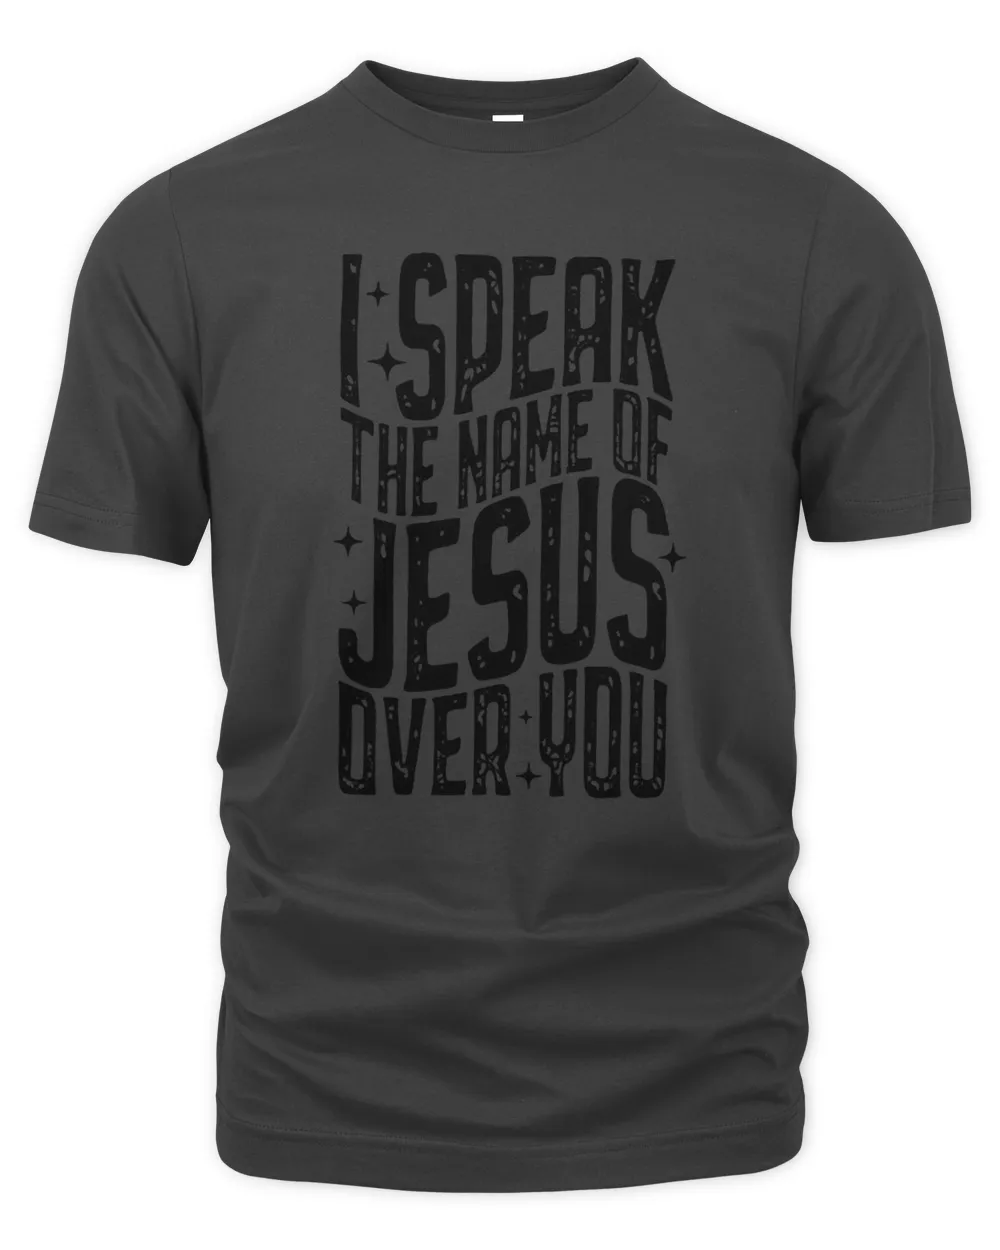 I Speak The Name Of Jesus Over You